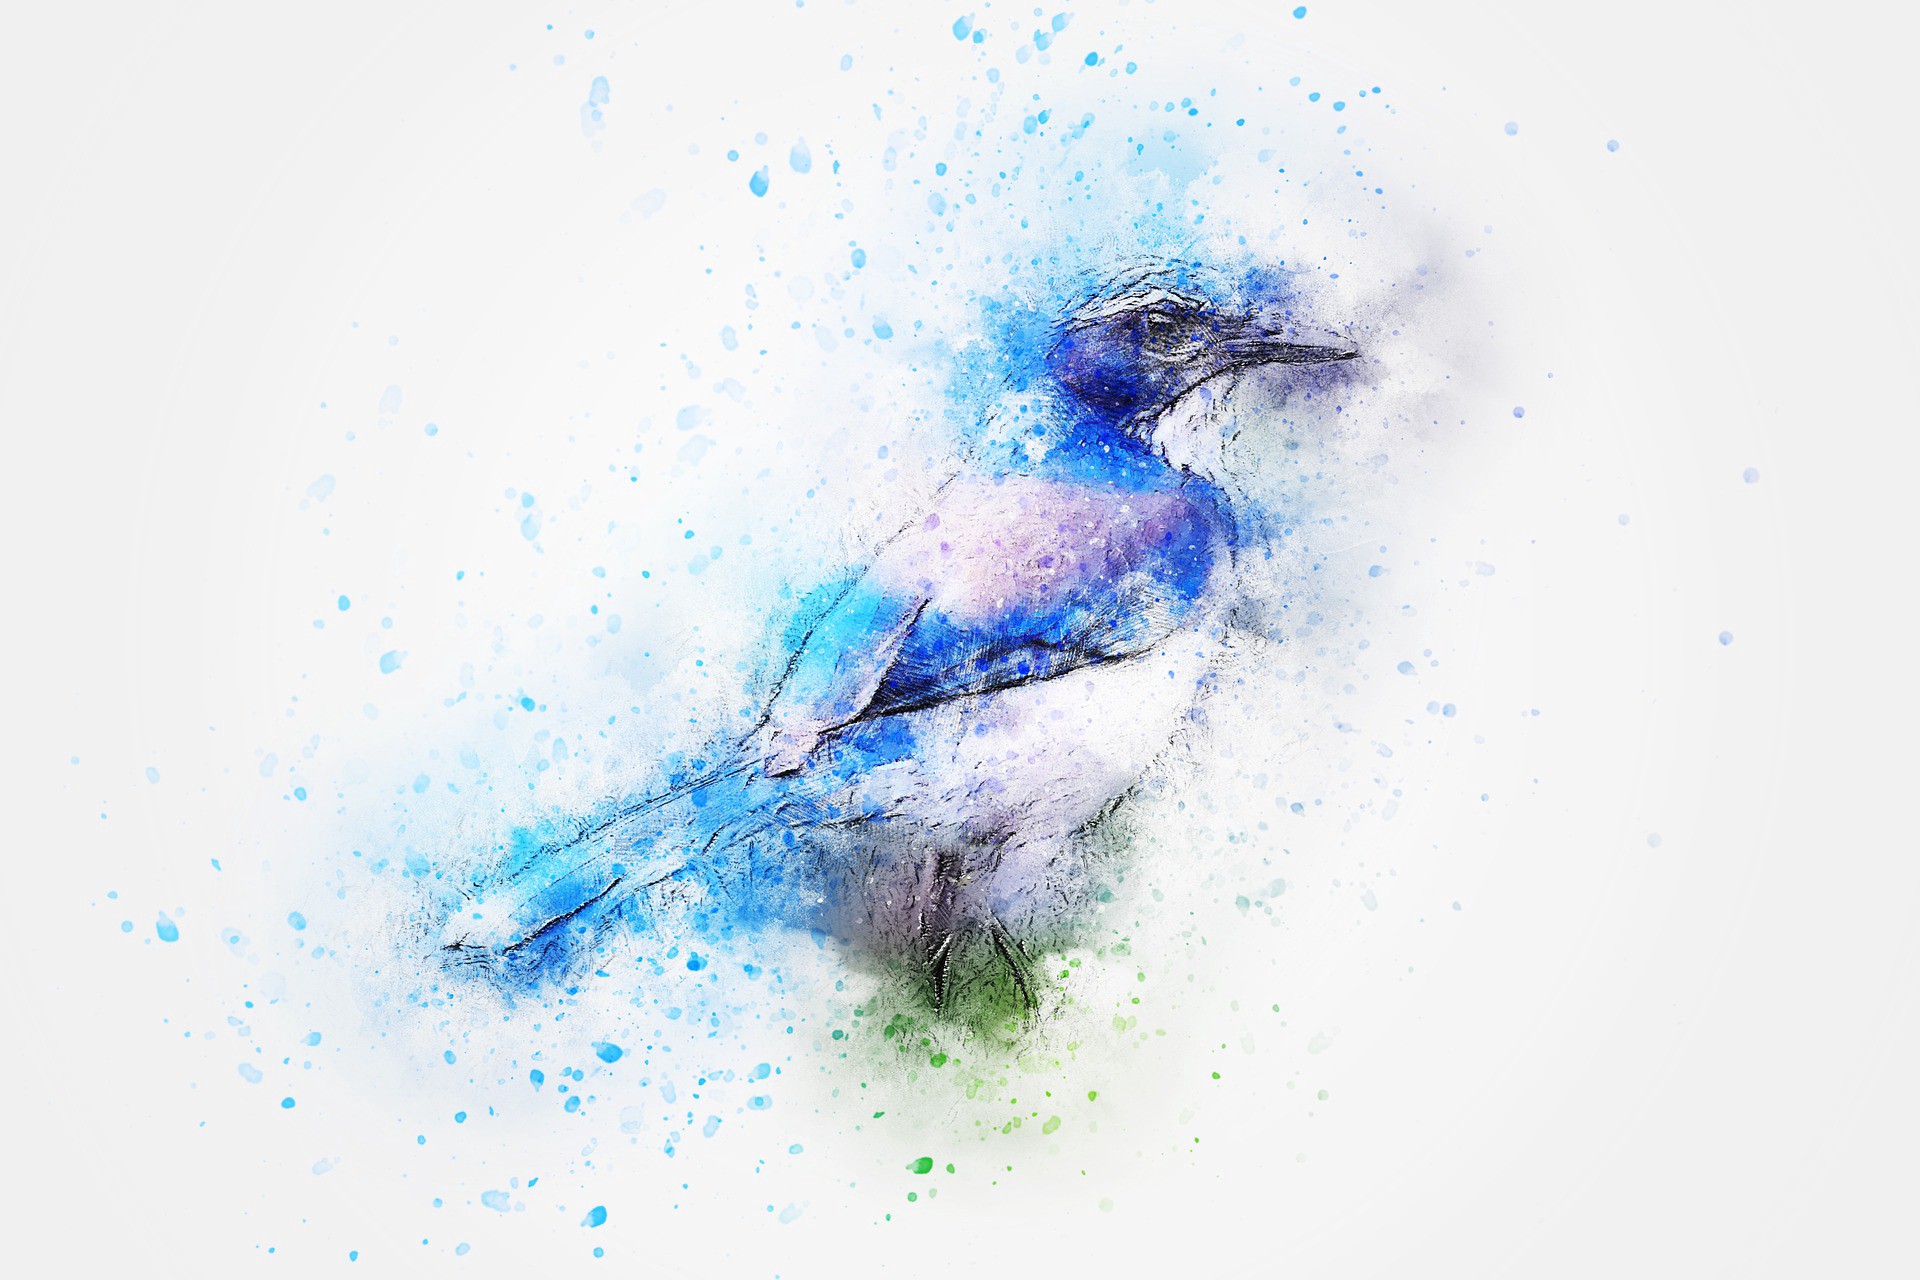 The Blue Bird – P.S. I Love You